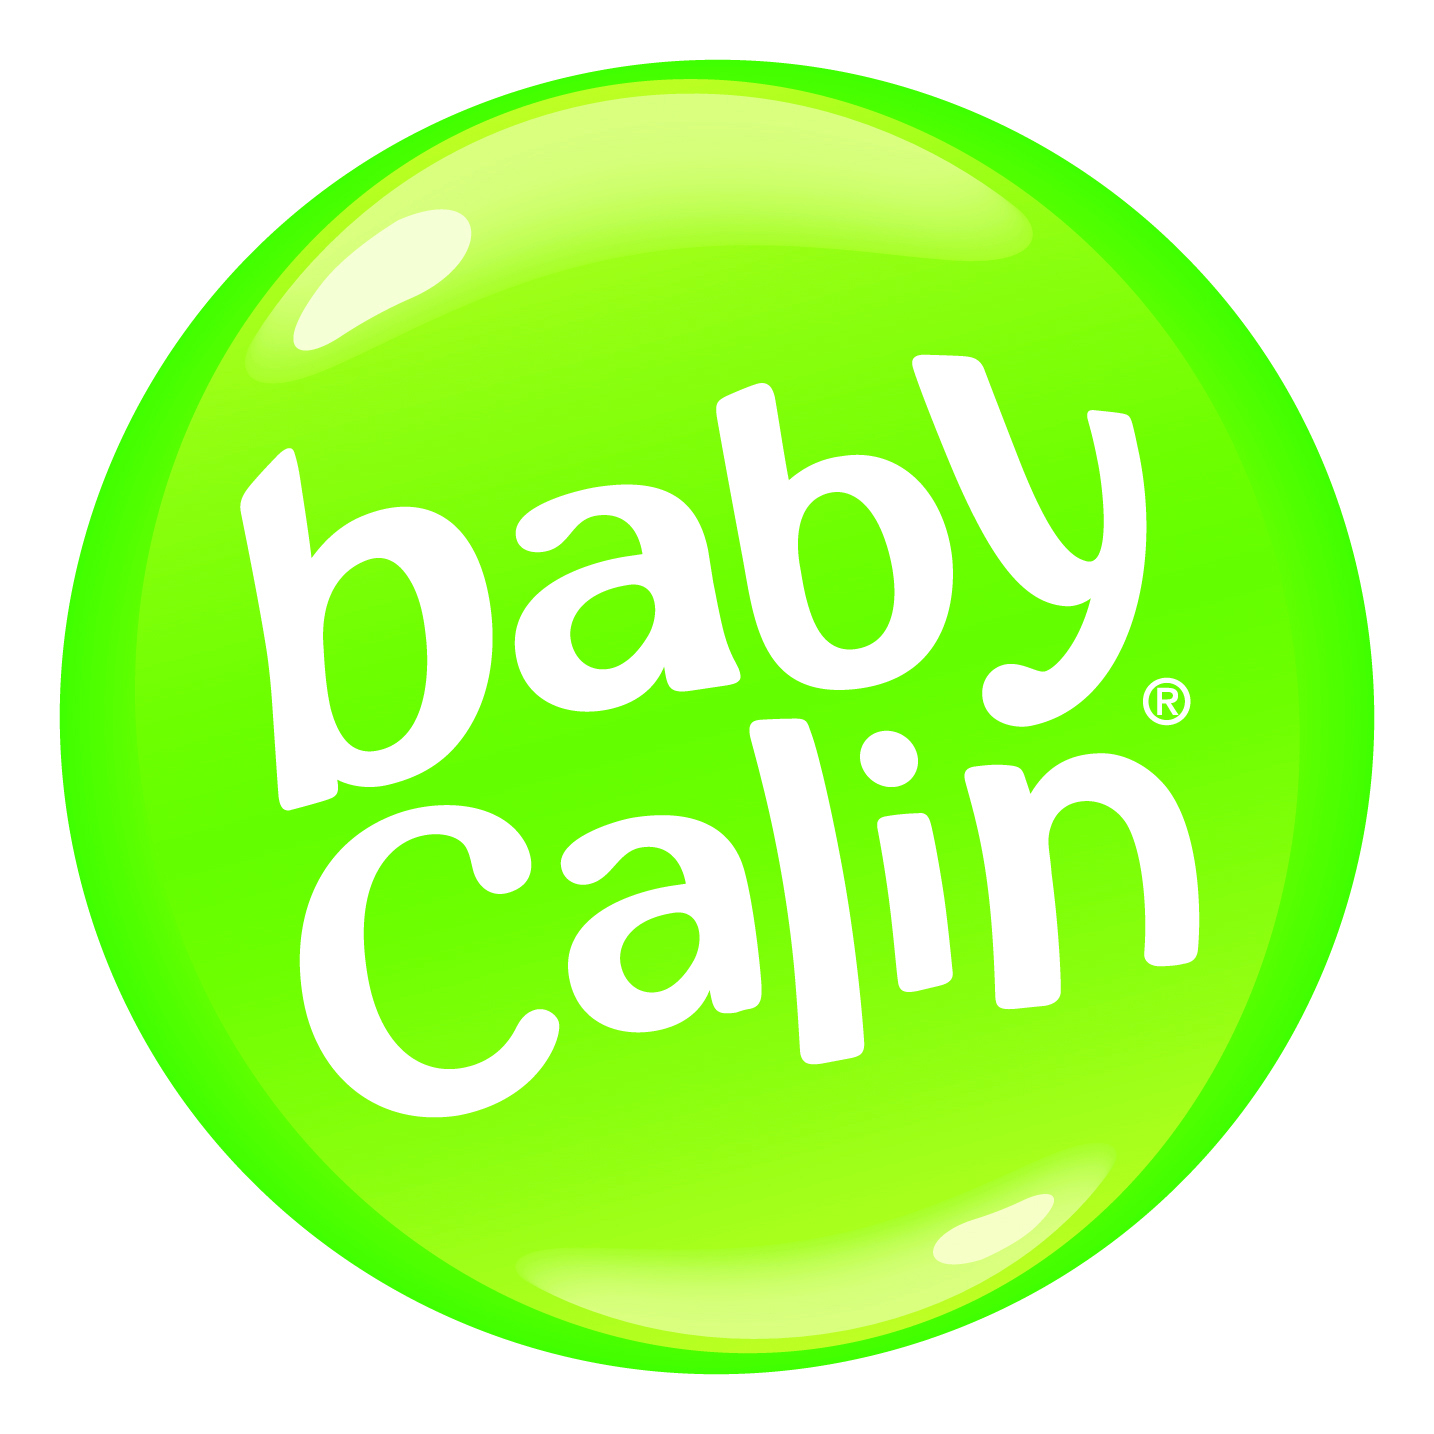 BABY CALIN